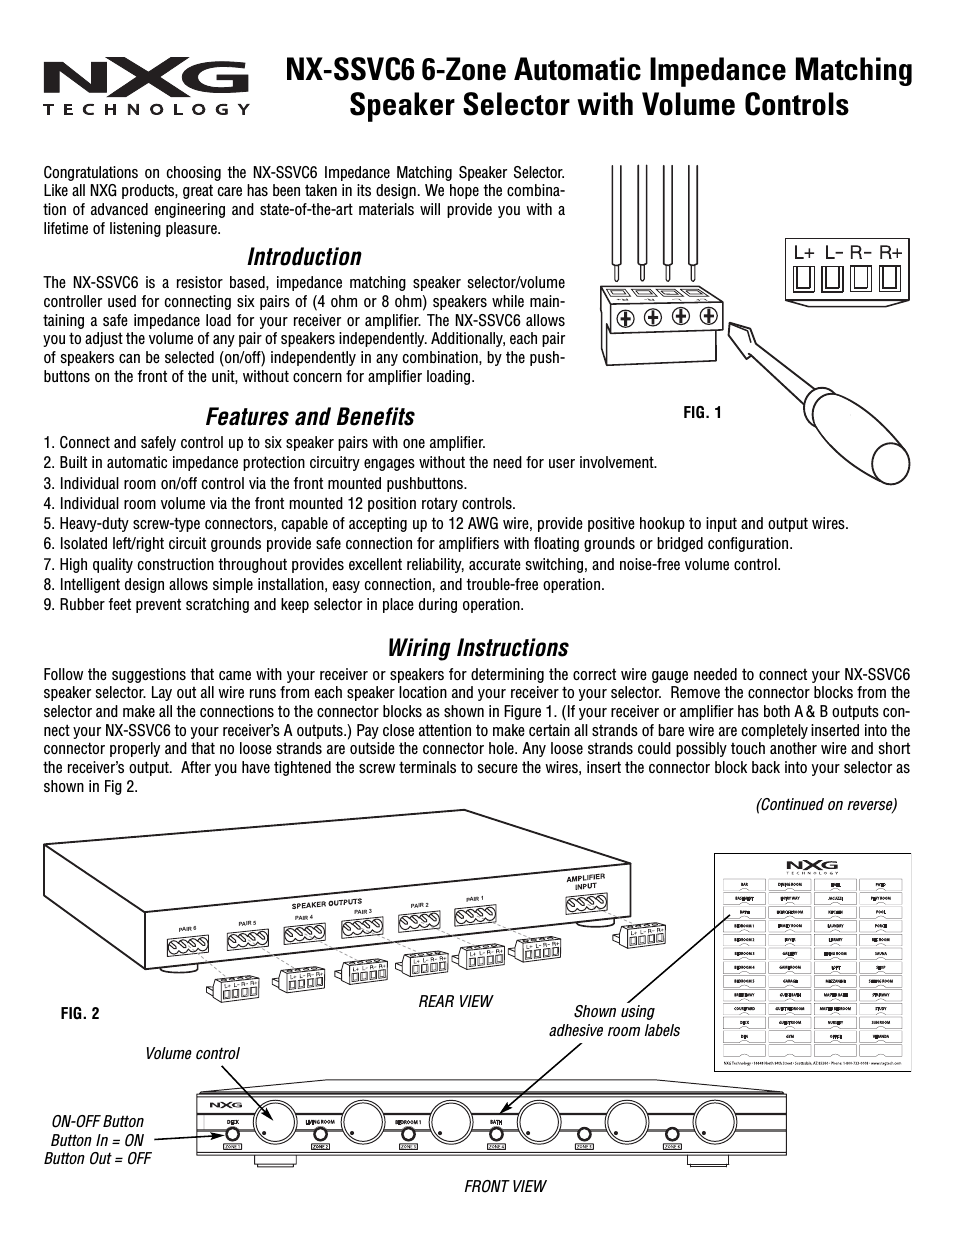 NX-SSVC6 - Six Zone Automatic Impedance Matching Speaker Selector